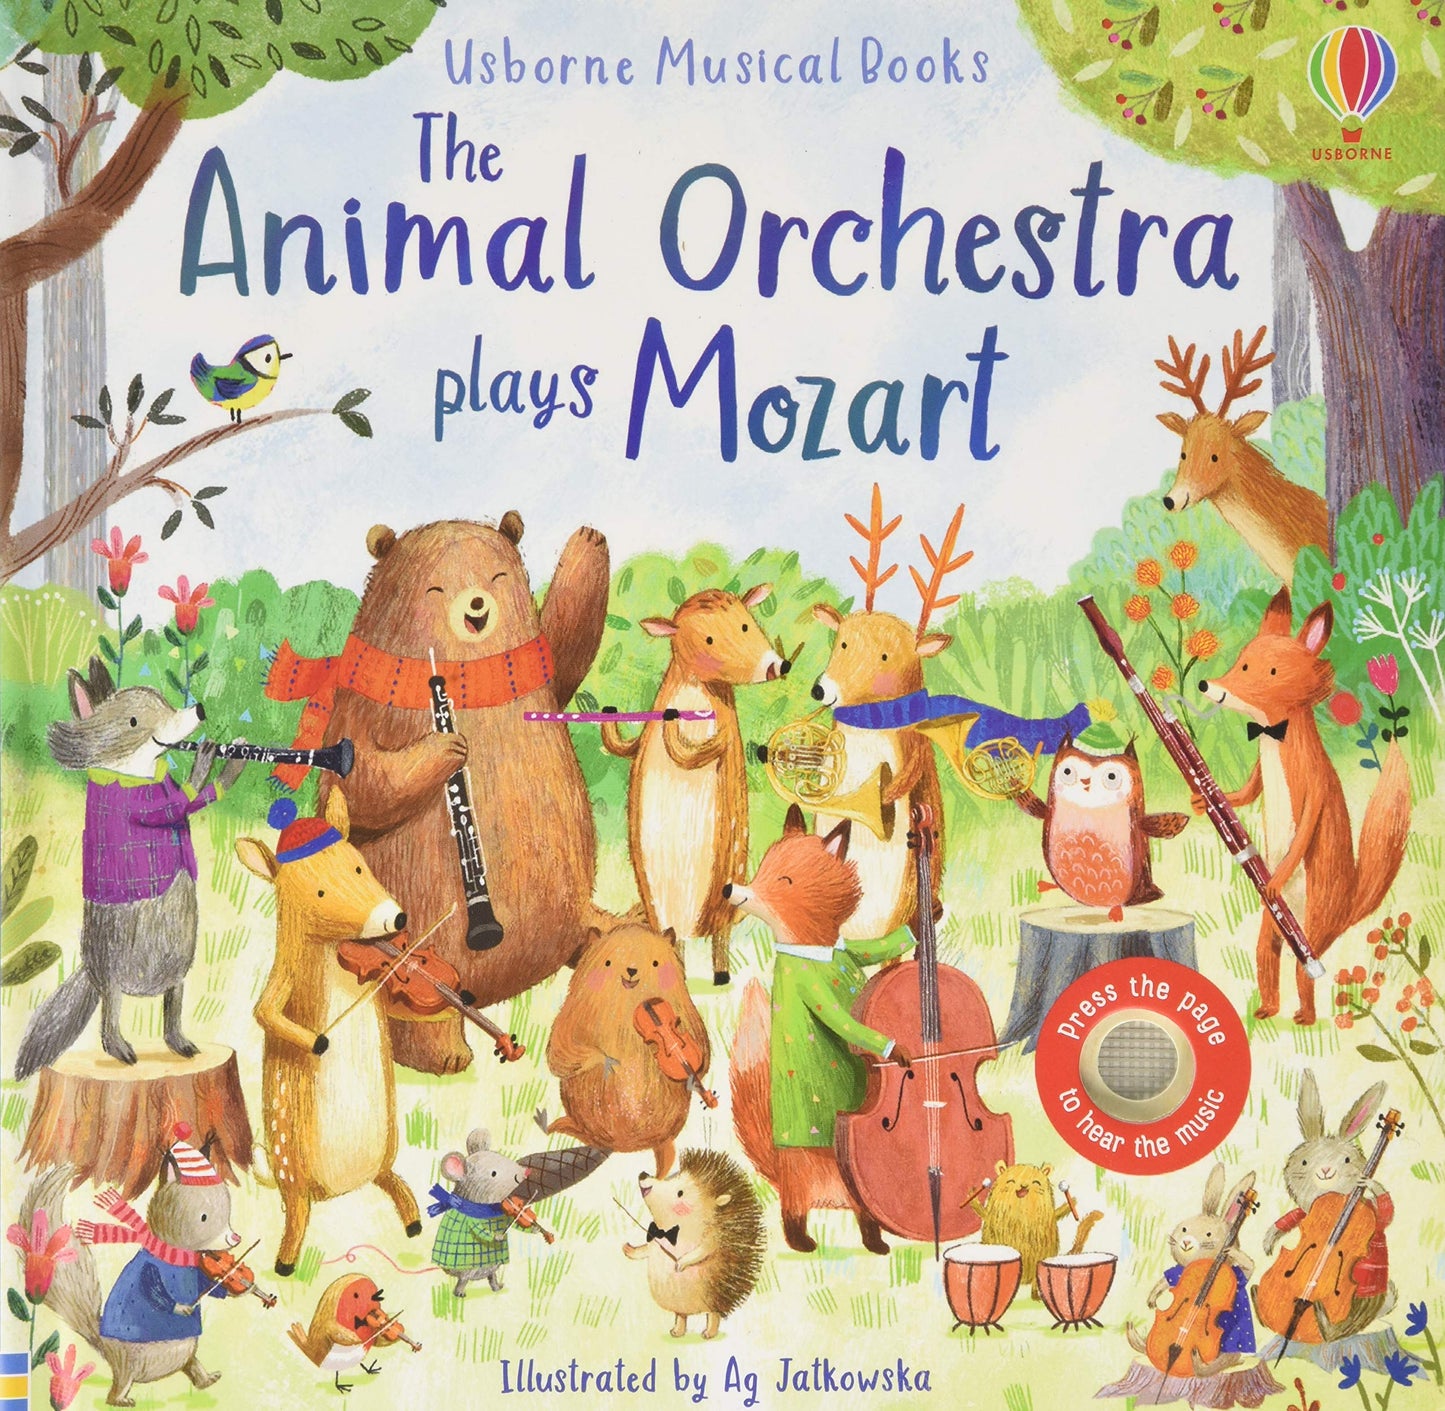 Usborne Sound Books - The Animal Orchestra plays Mozart